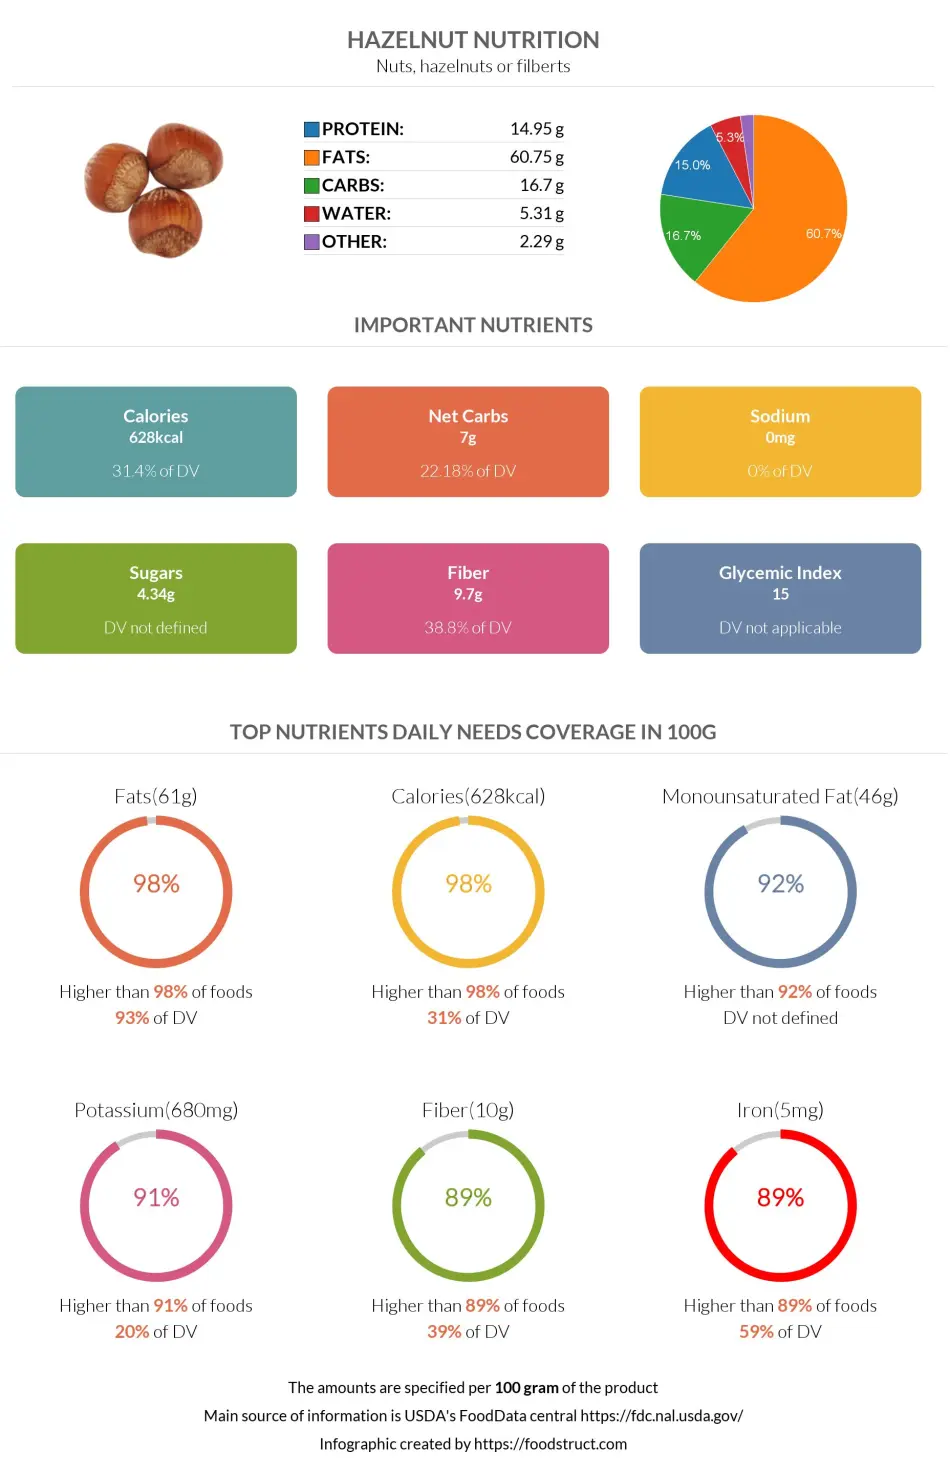 Hazelnut nutrition infographic